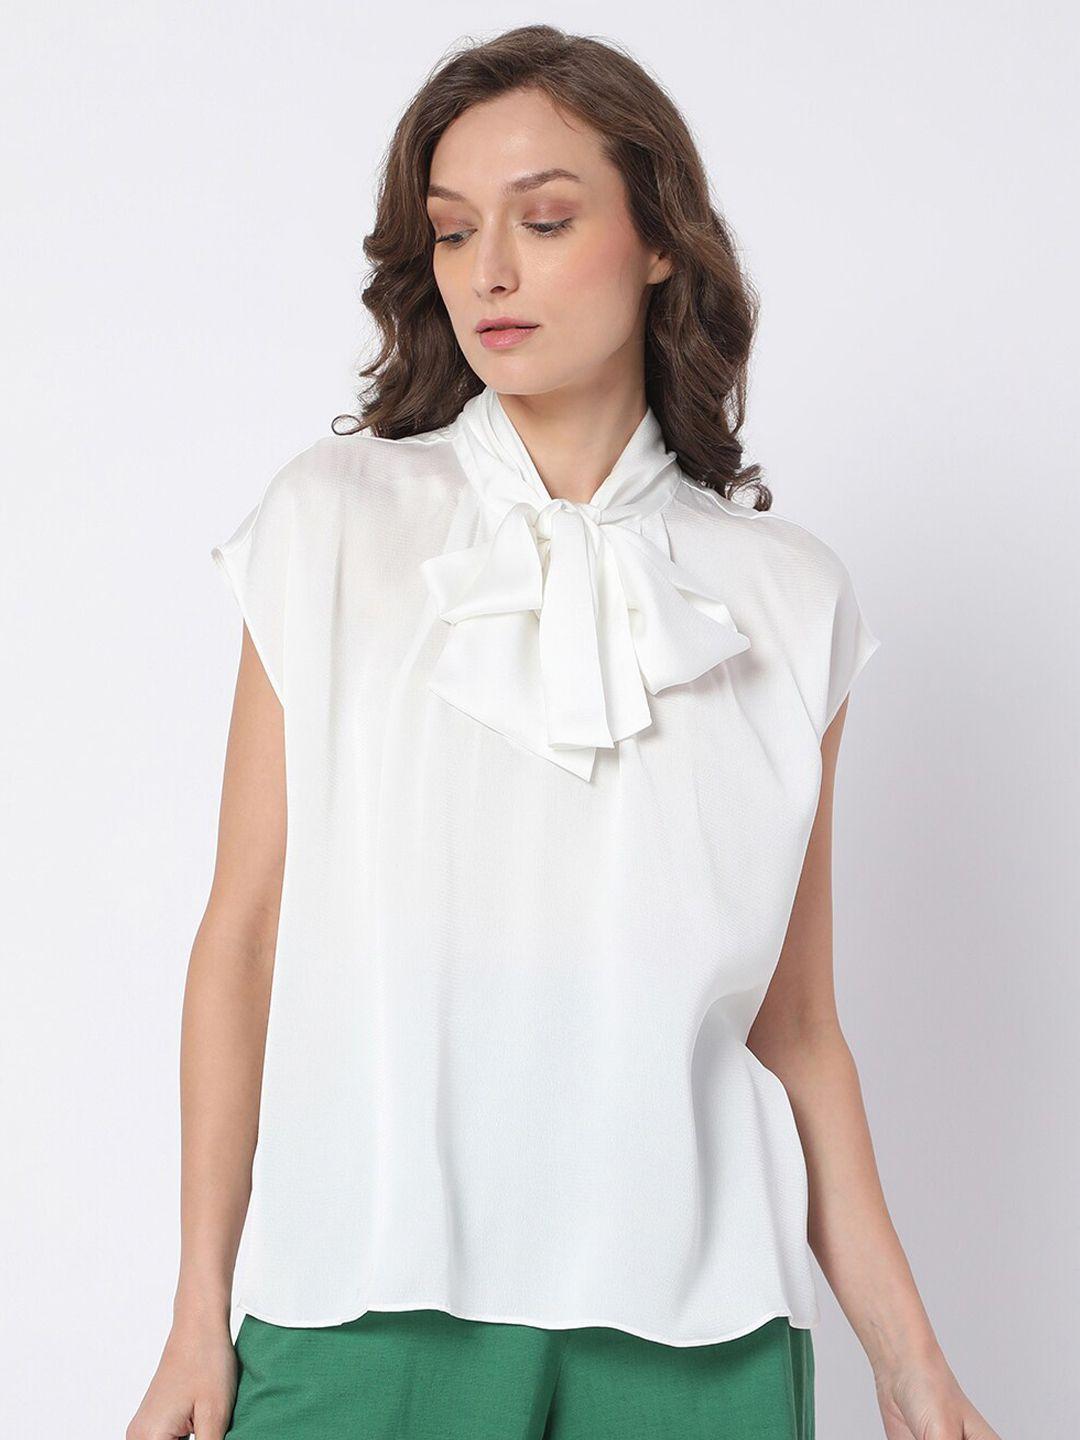 vero-moda-white-tie-up-neck-extended-sleeves-top